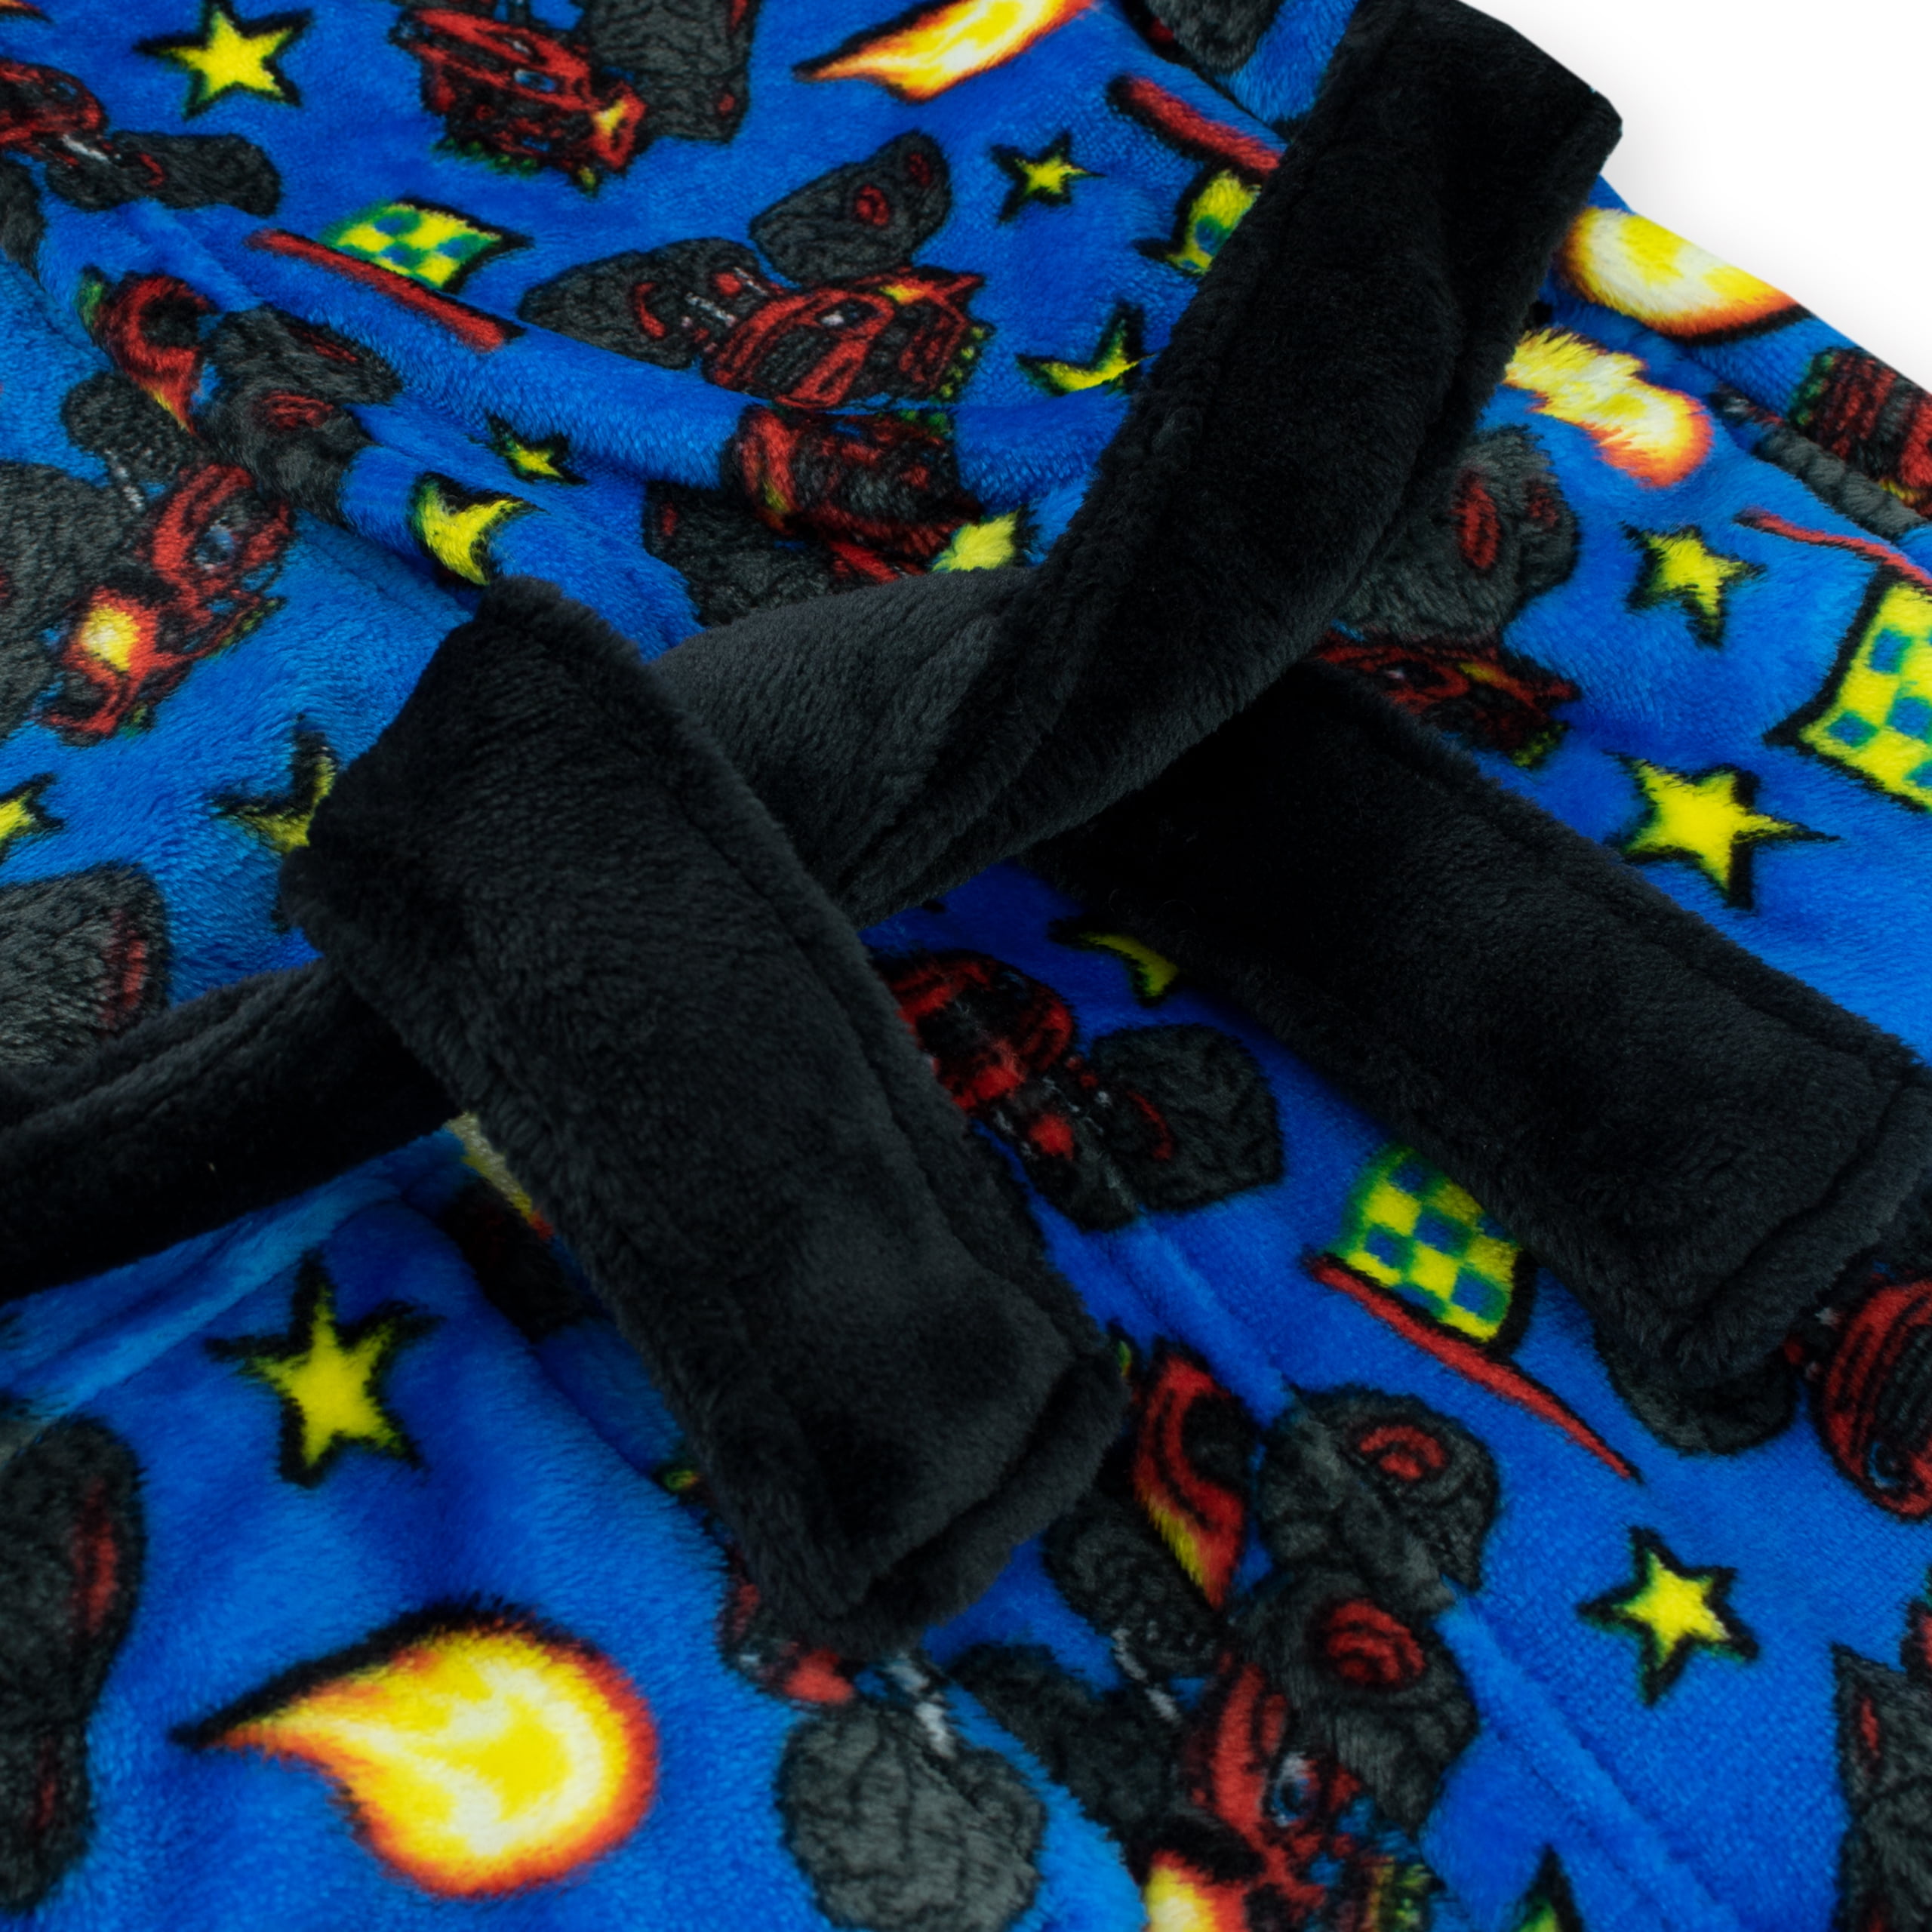 BOYS BLAZE AND the Monster Machines Pyjamas Matching PJs Nightwear Set Navy  Blue £13.99 - PicClick UK